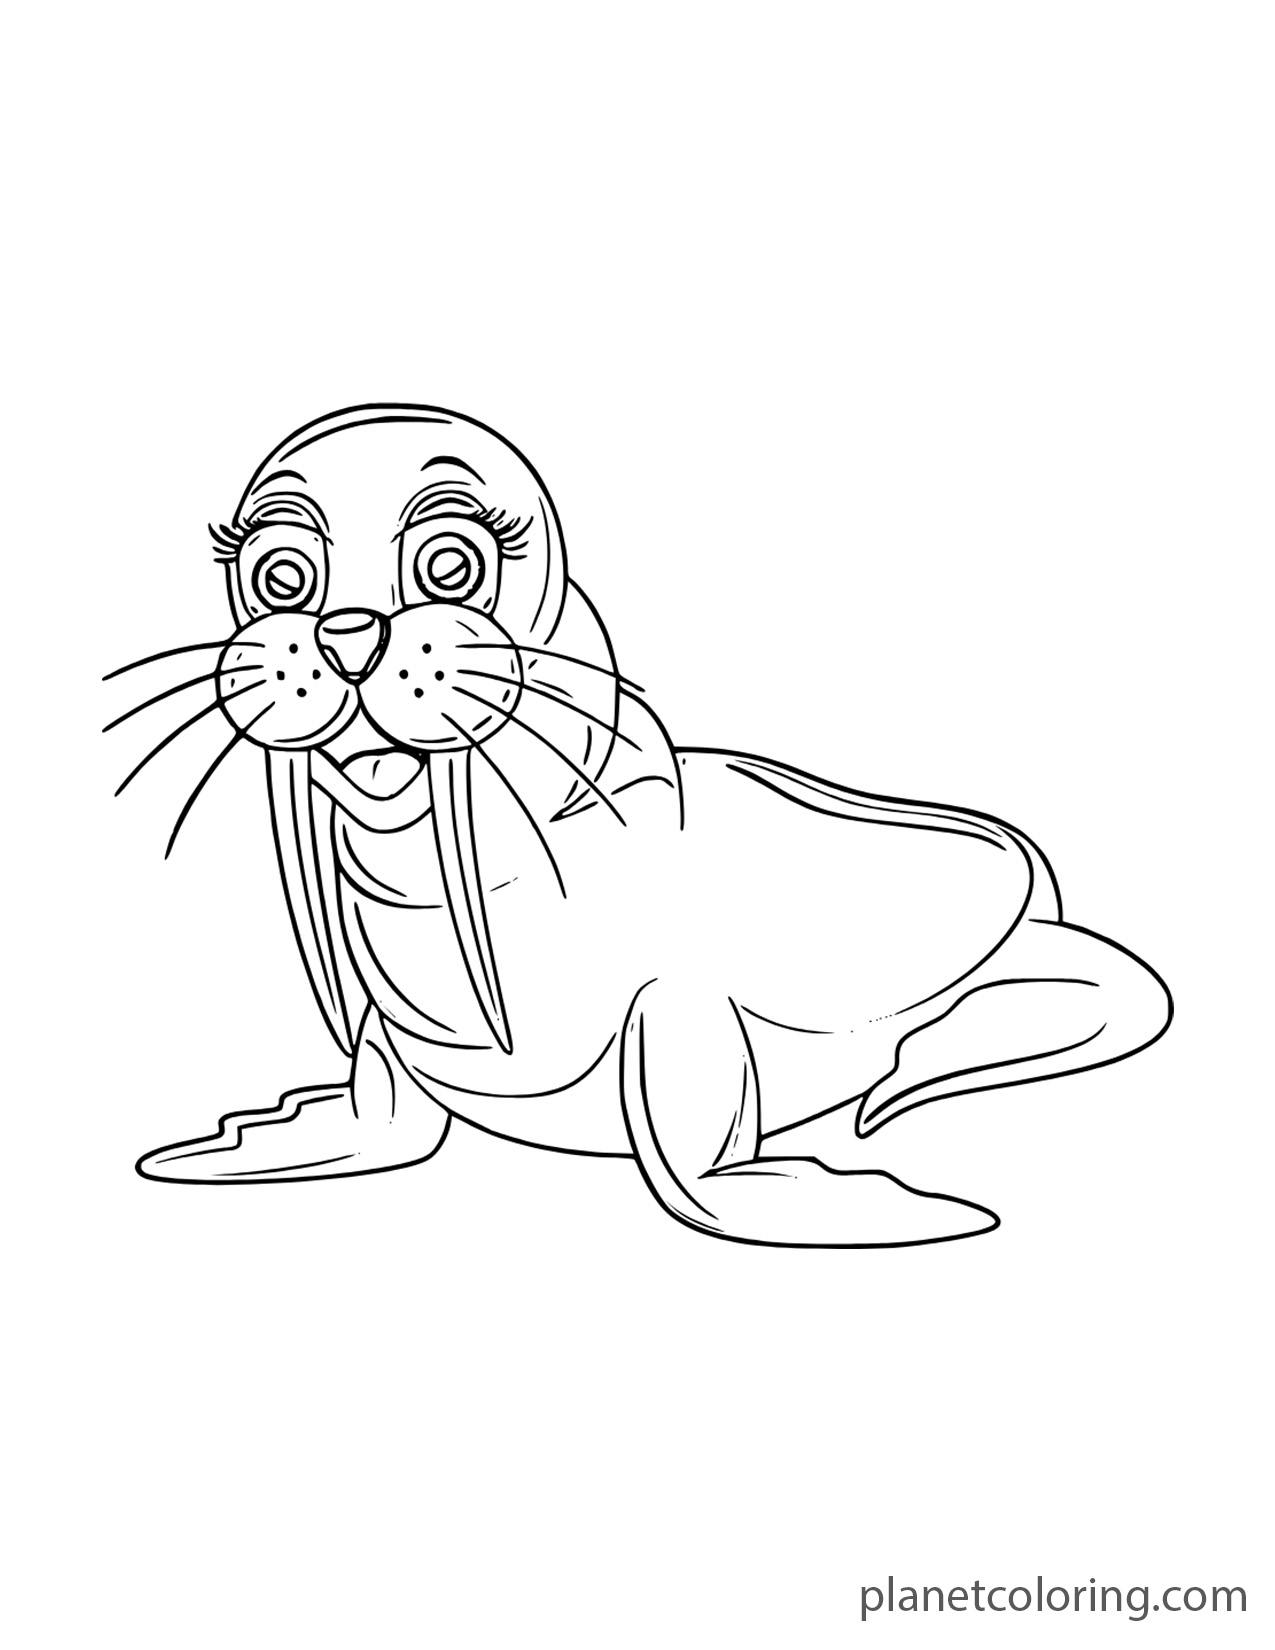 Sea lion with big eyes